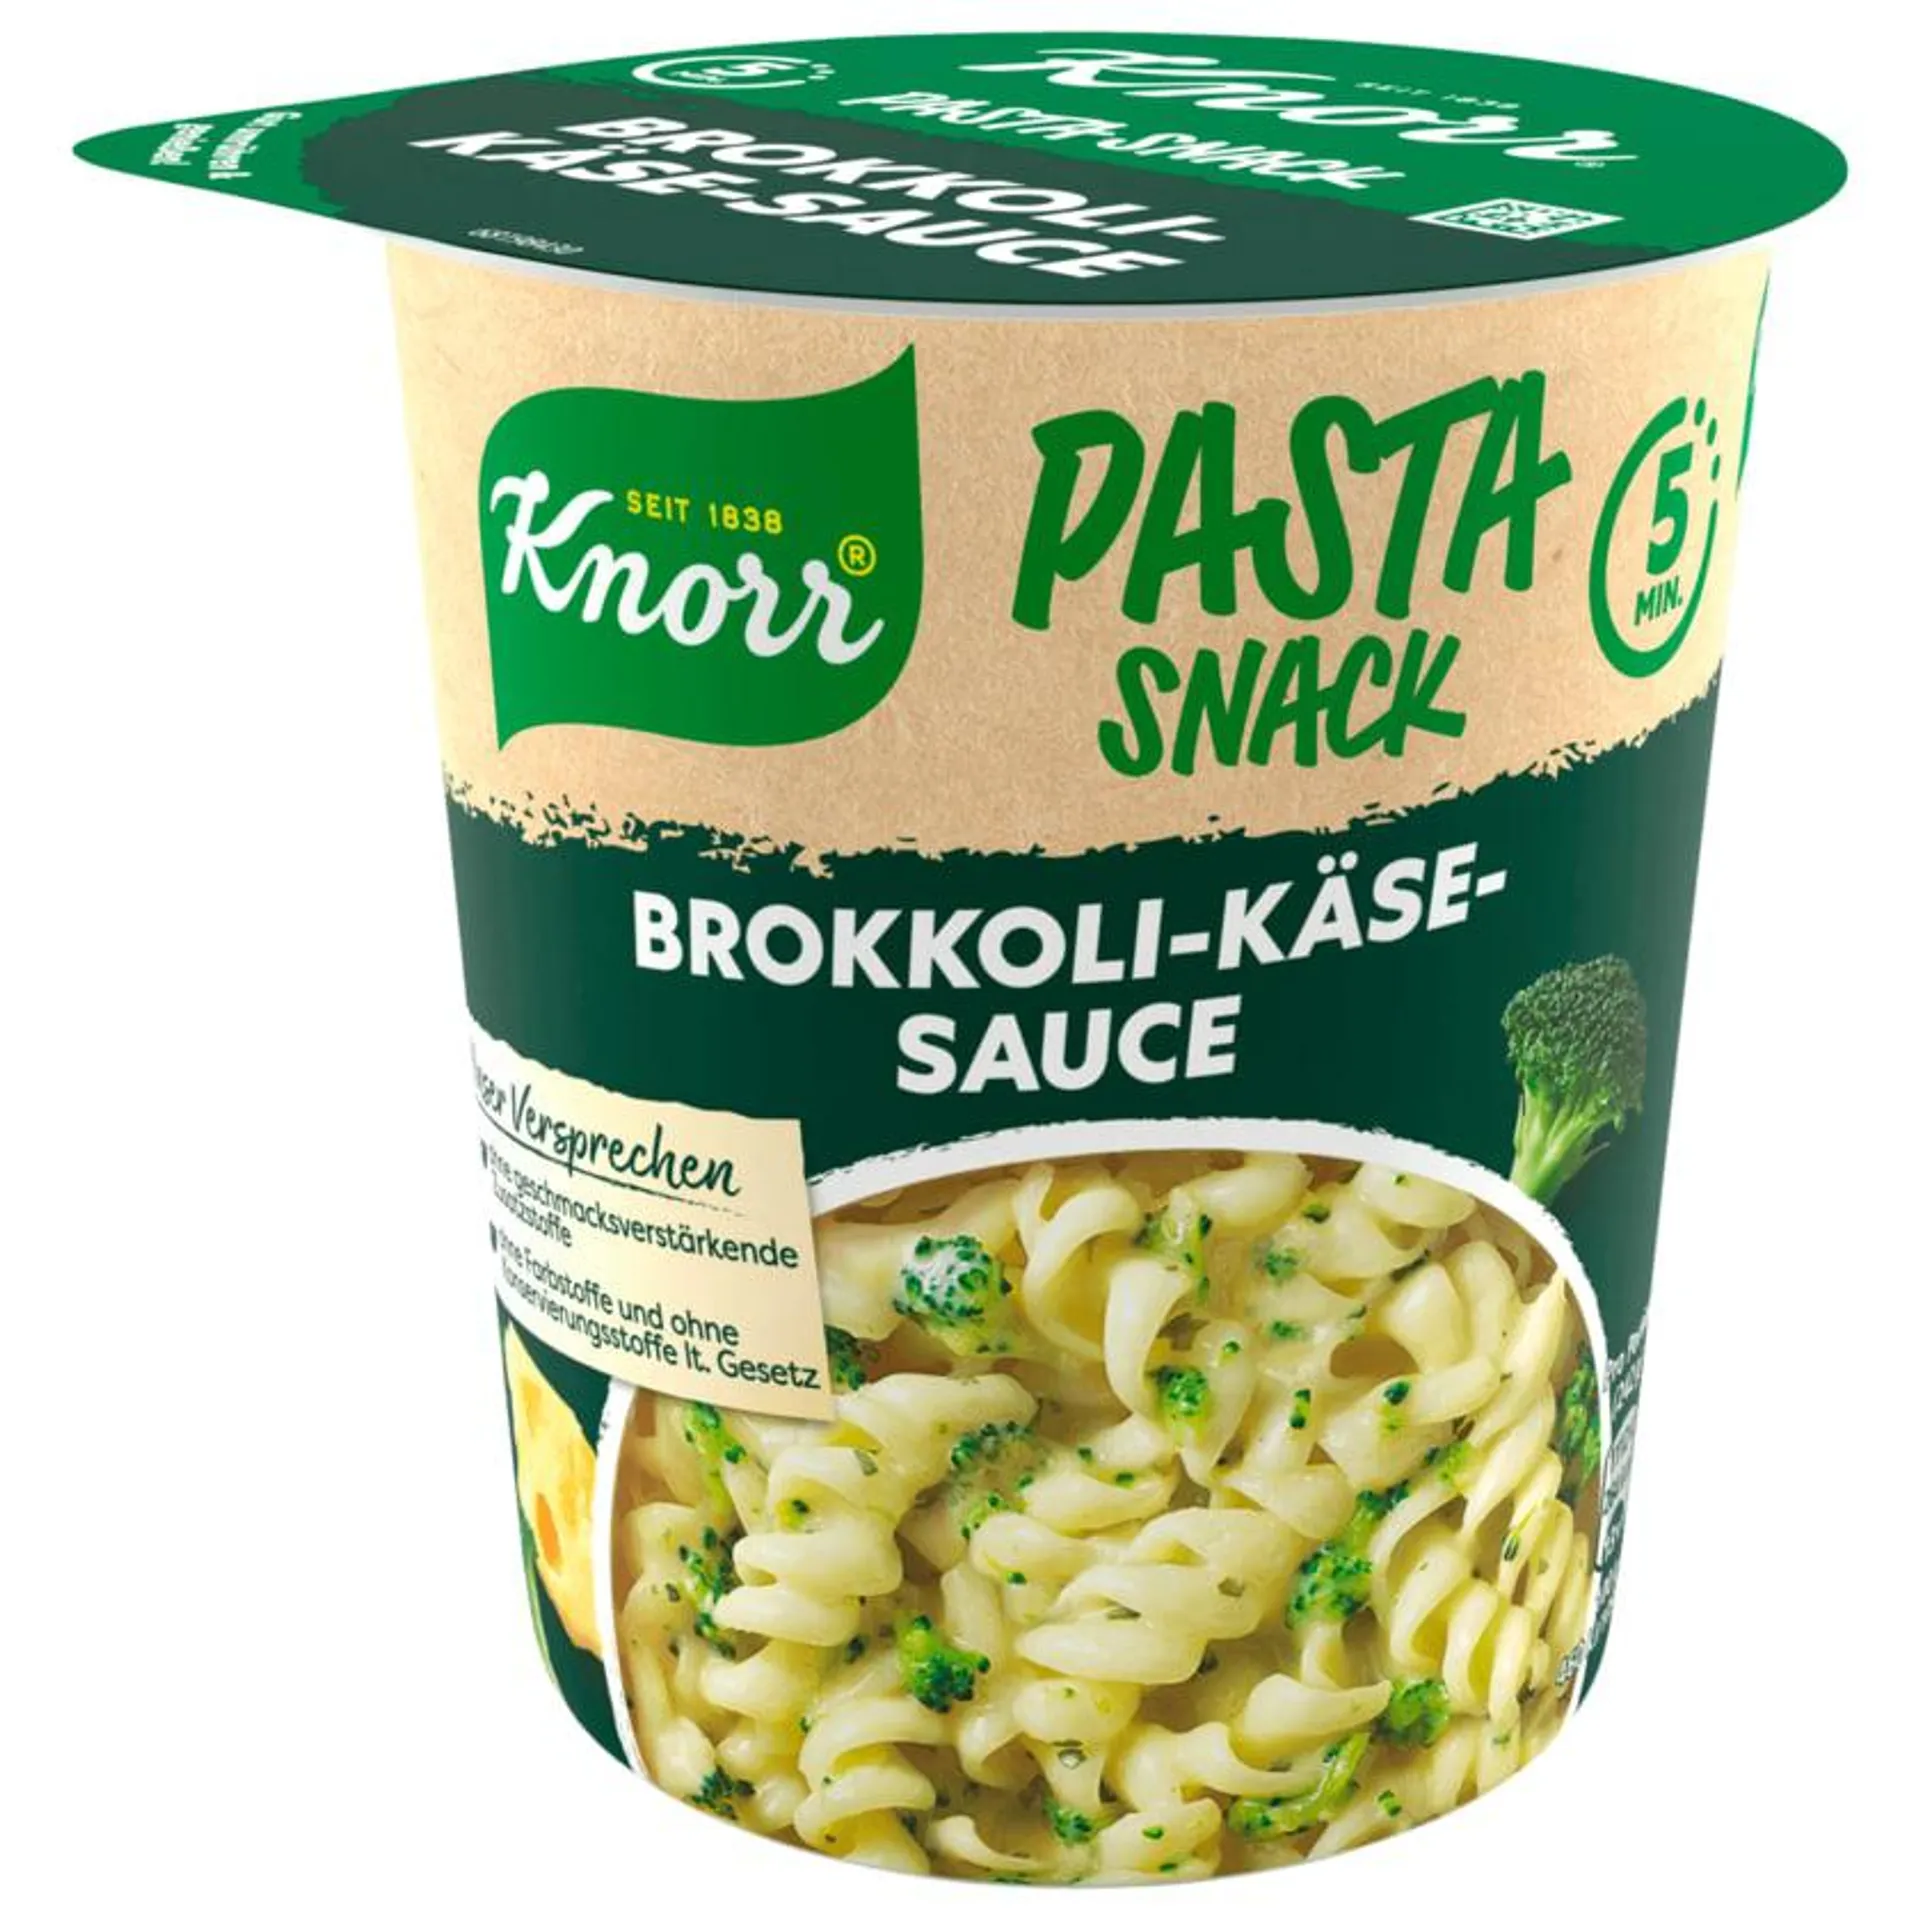 Knorr Pasta Snack Broccoli-Käse Sauce 62g